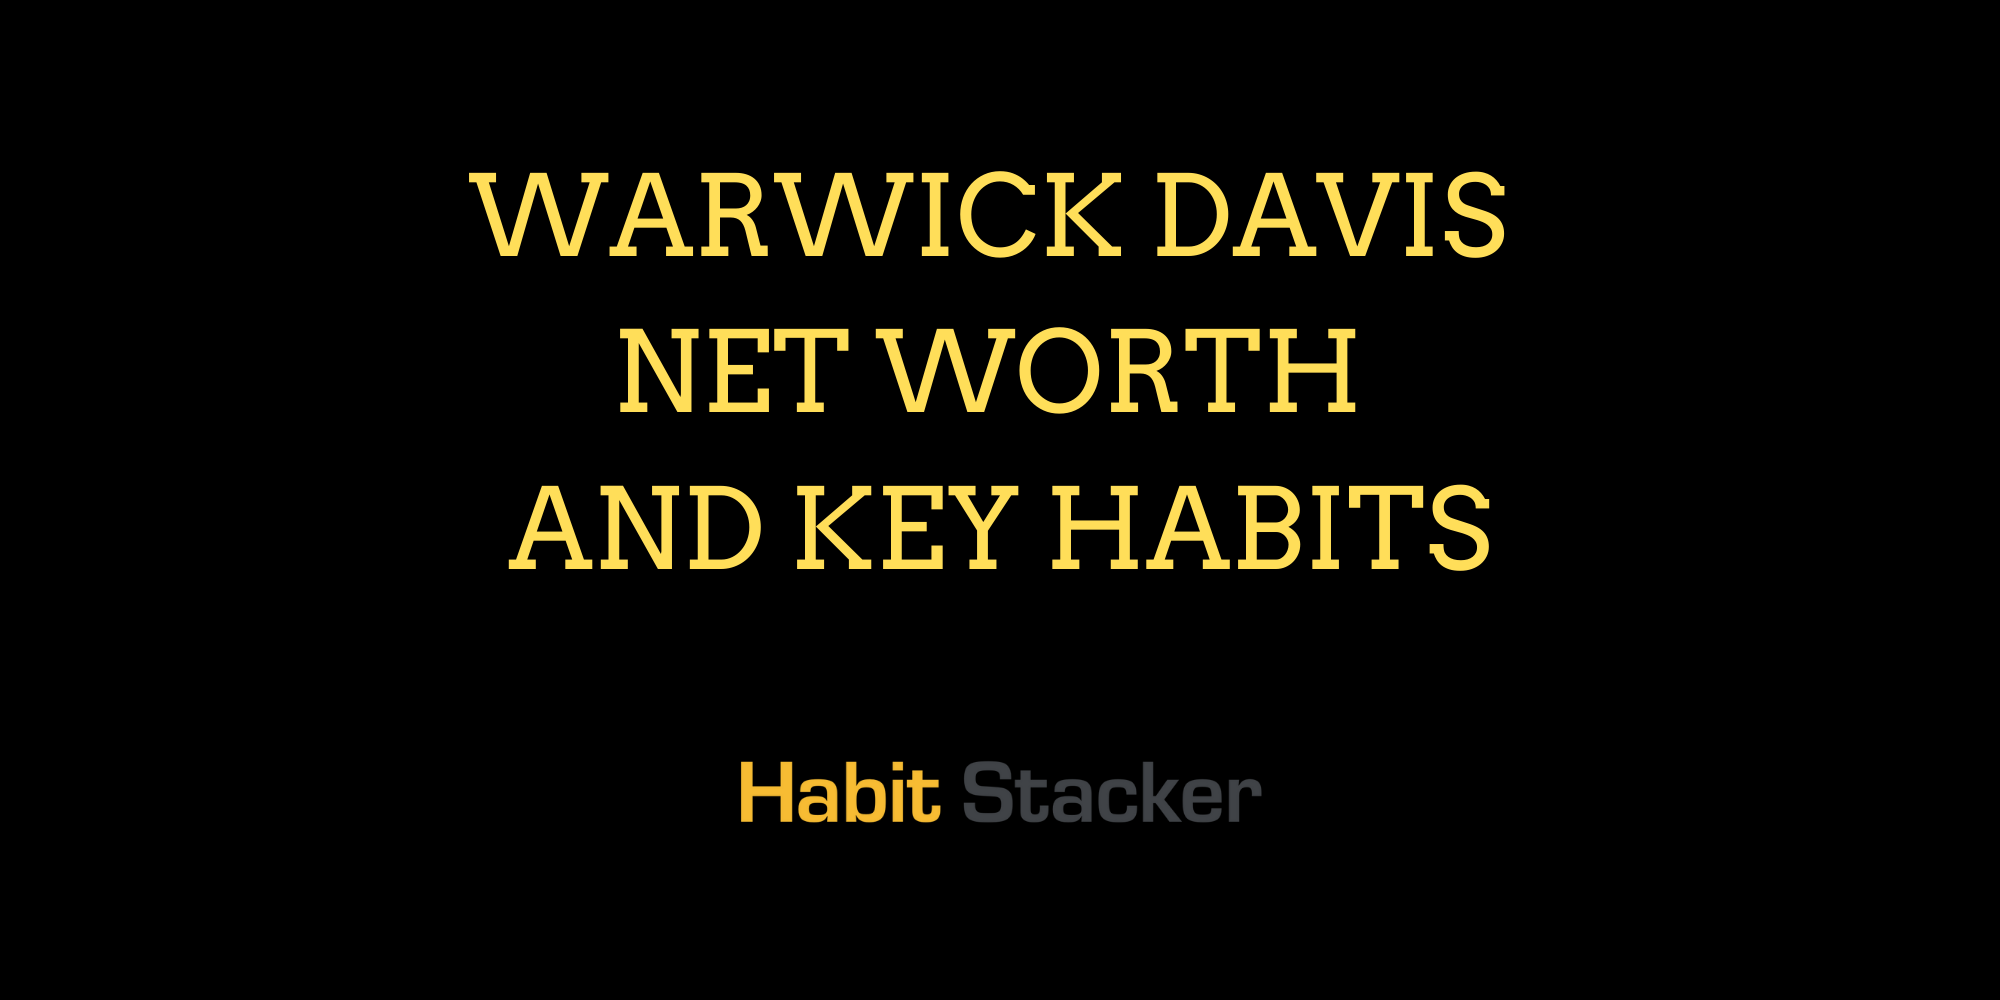 Warwick Davis Net Worth and Key Habits